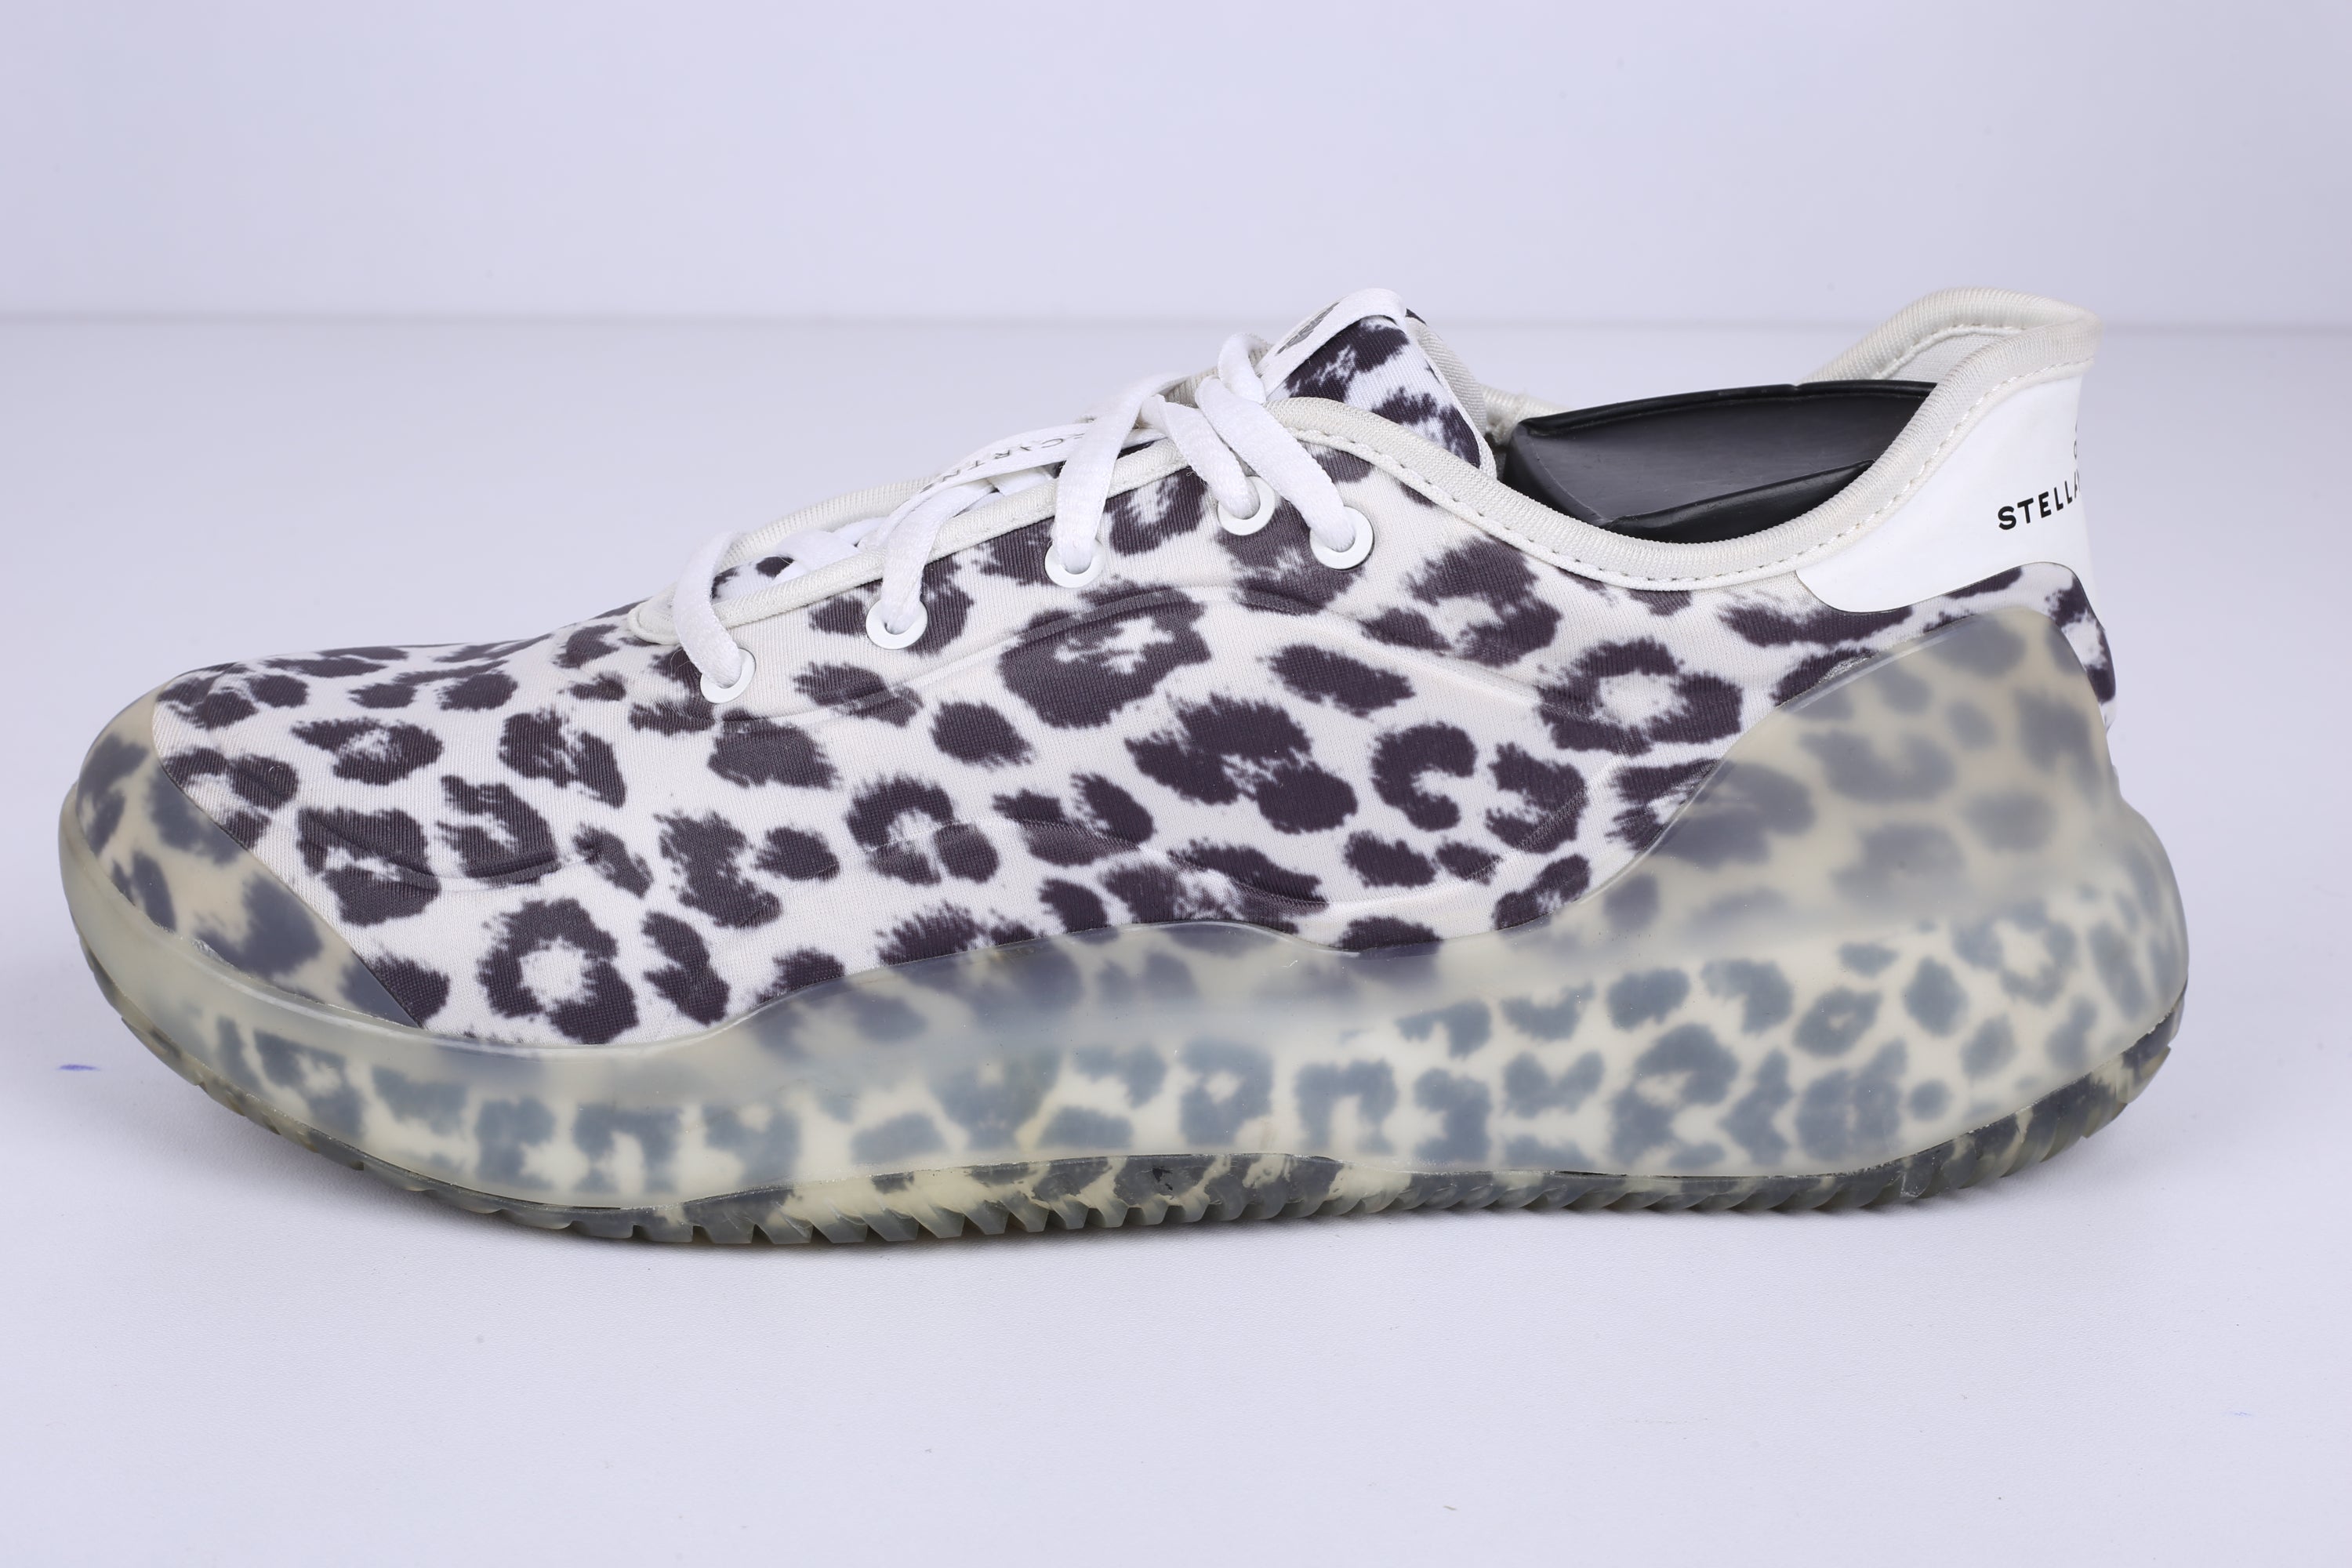 Adidas Stella McCartney Sneaker  - (Condition Premium*)